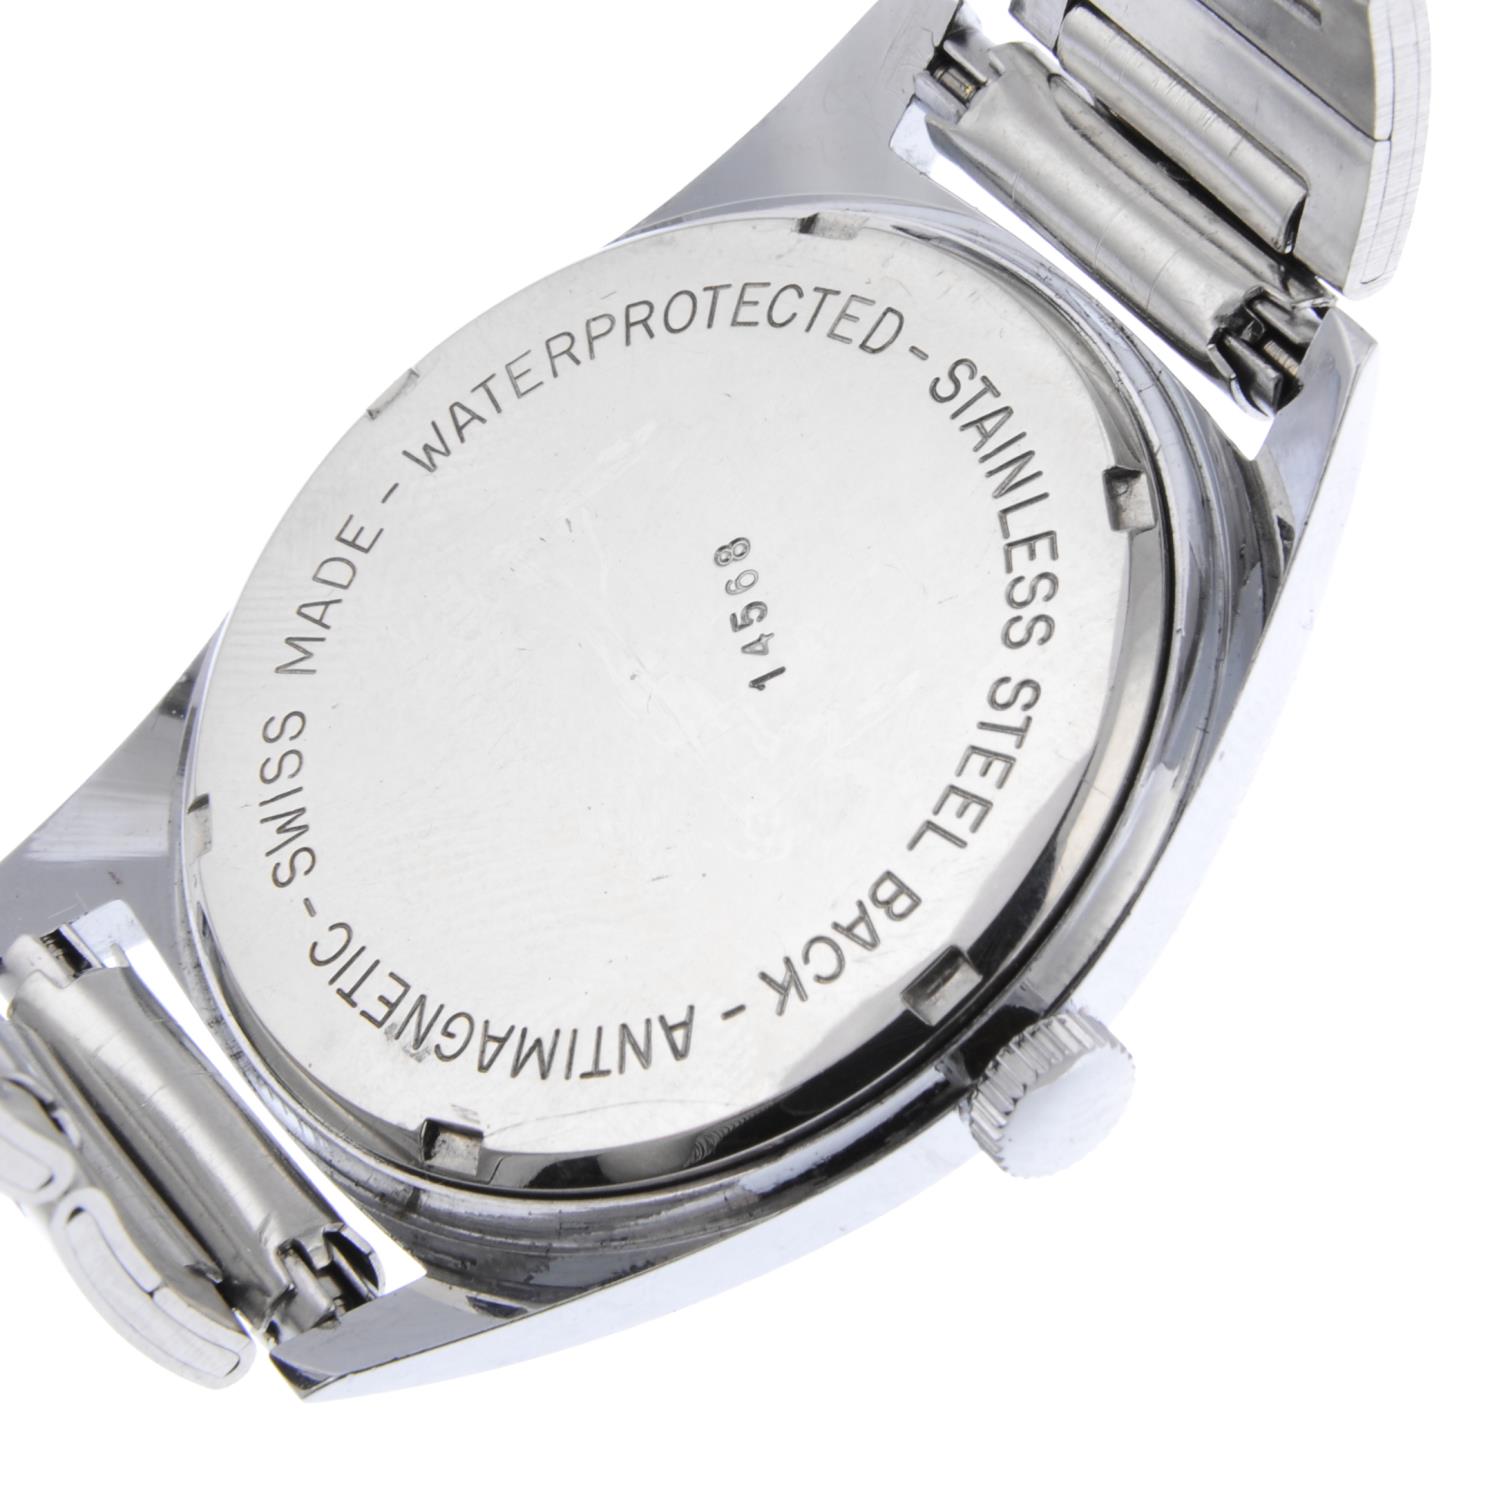 GIRARD PERREGAUX - a gentleman's bracelet watch. - Image 4 of 4